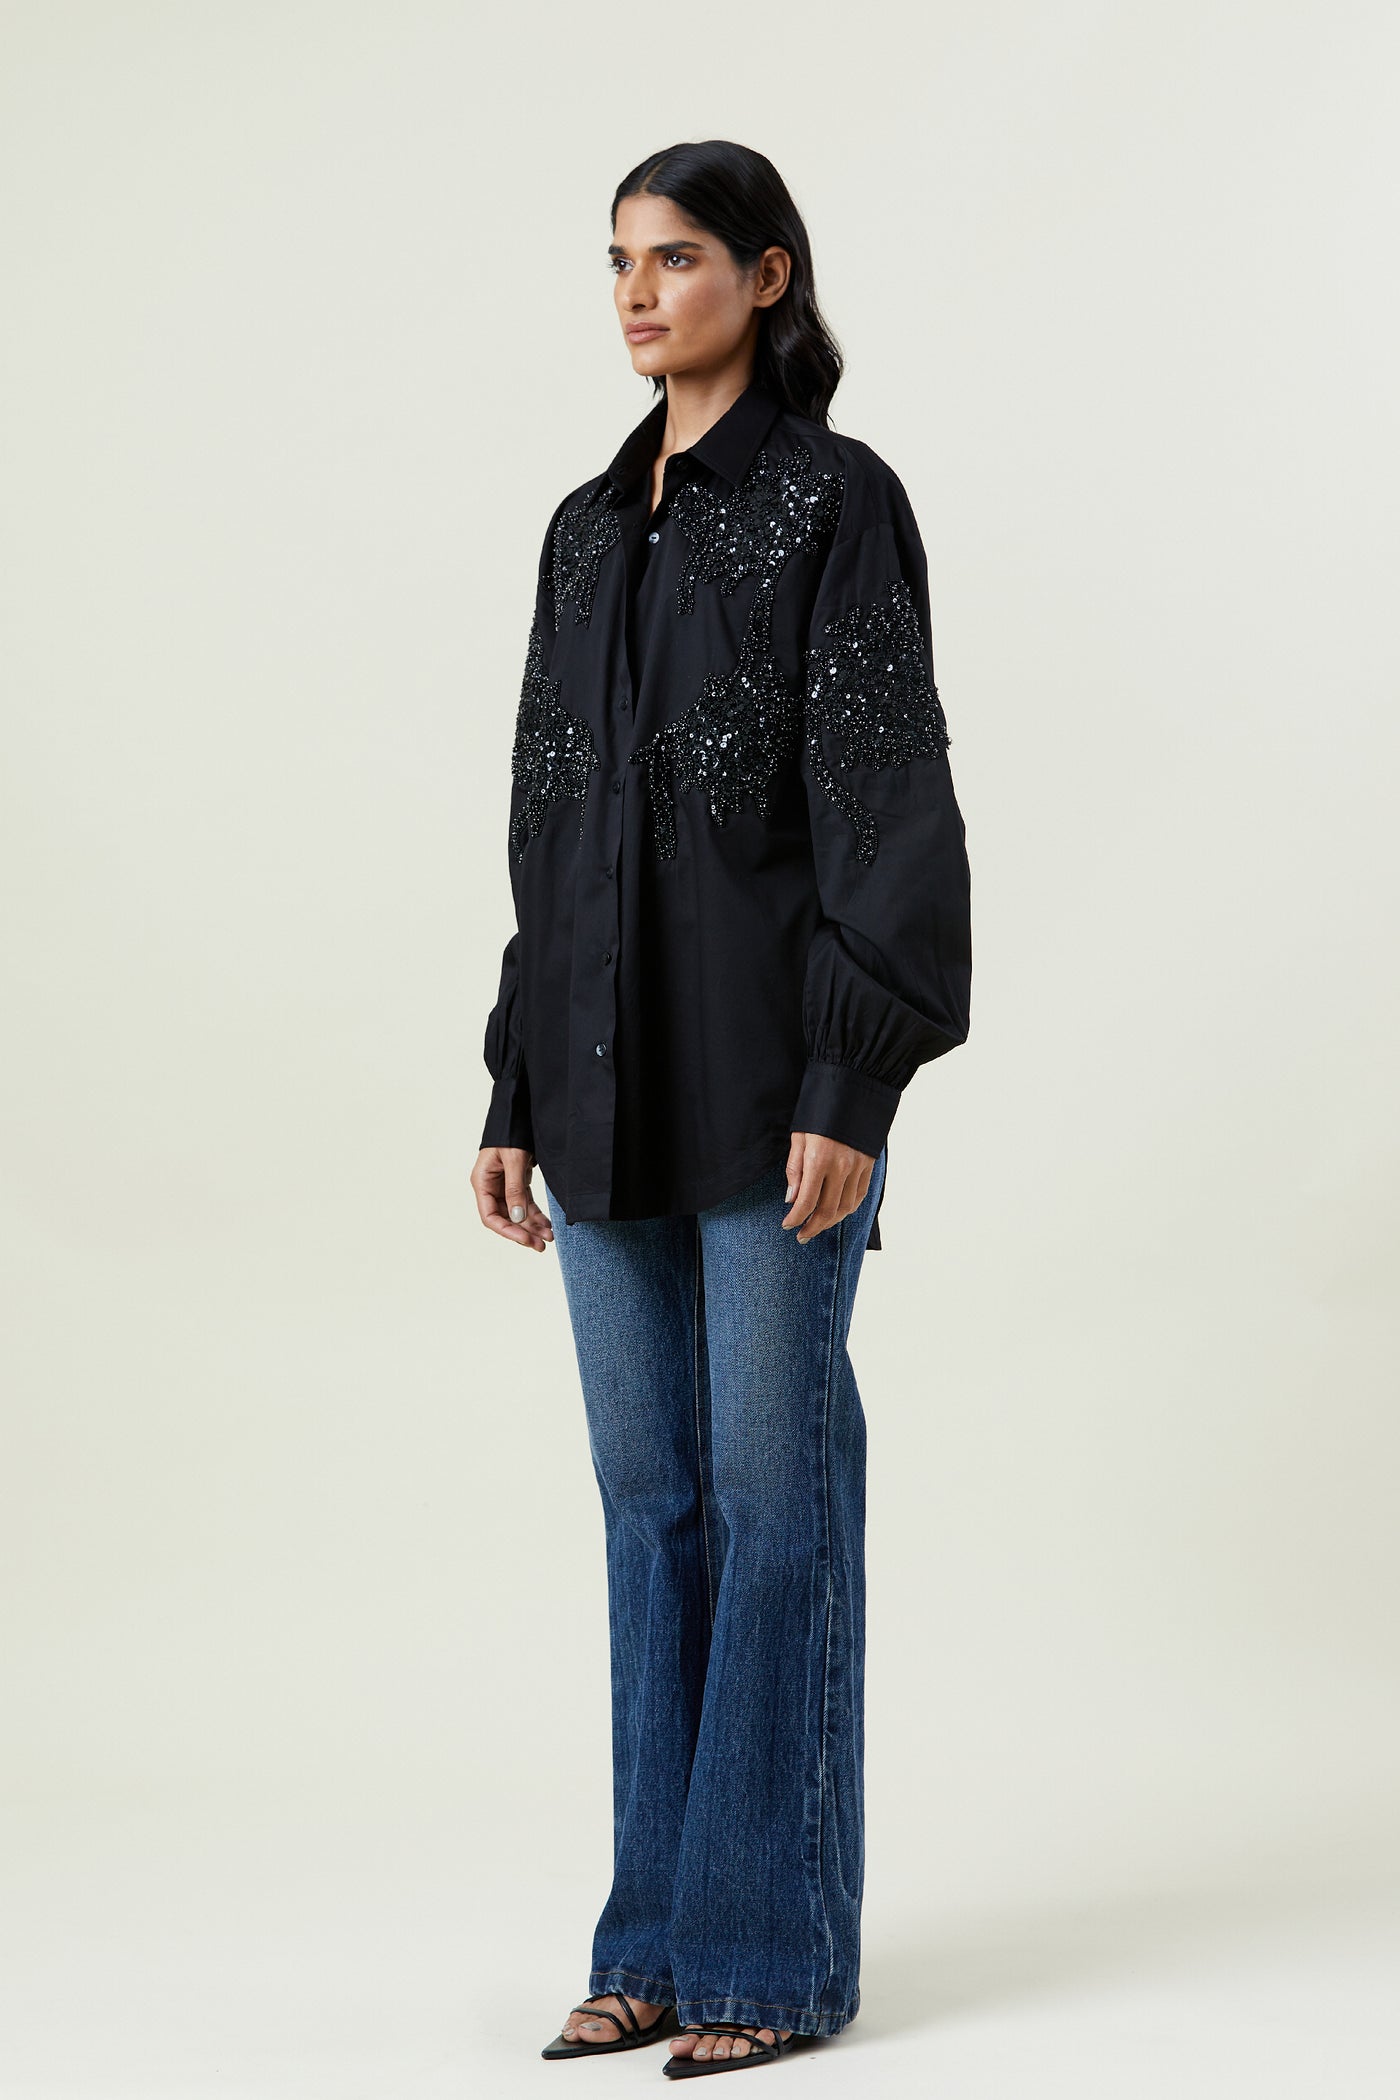 Kanika Goyal Label Fiery Bloom Embellished Shirt indian designer wear online shopping melange singapore